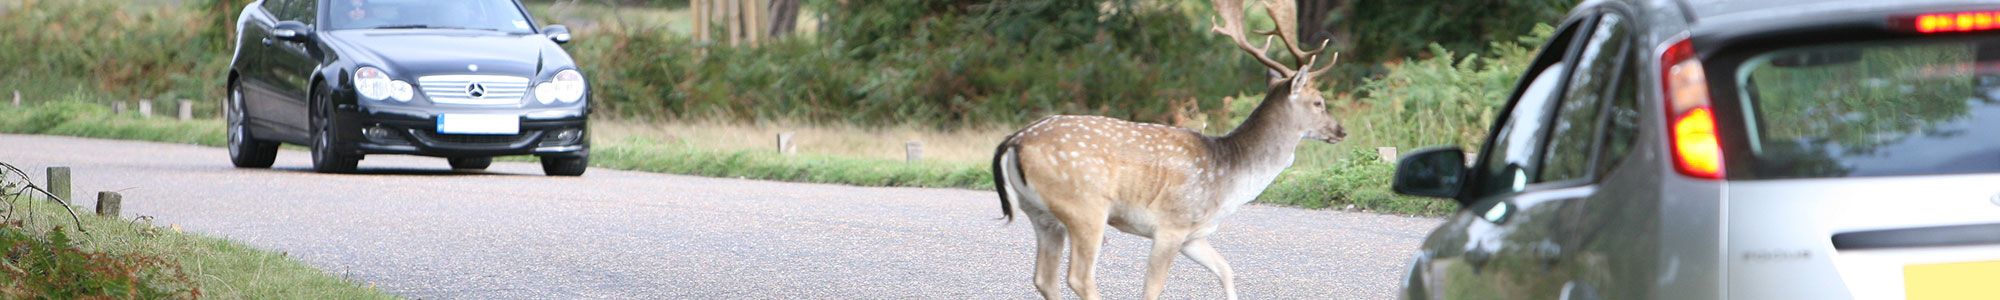 Deer on British roads